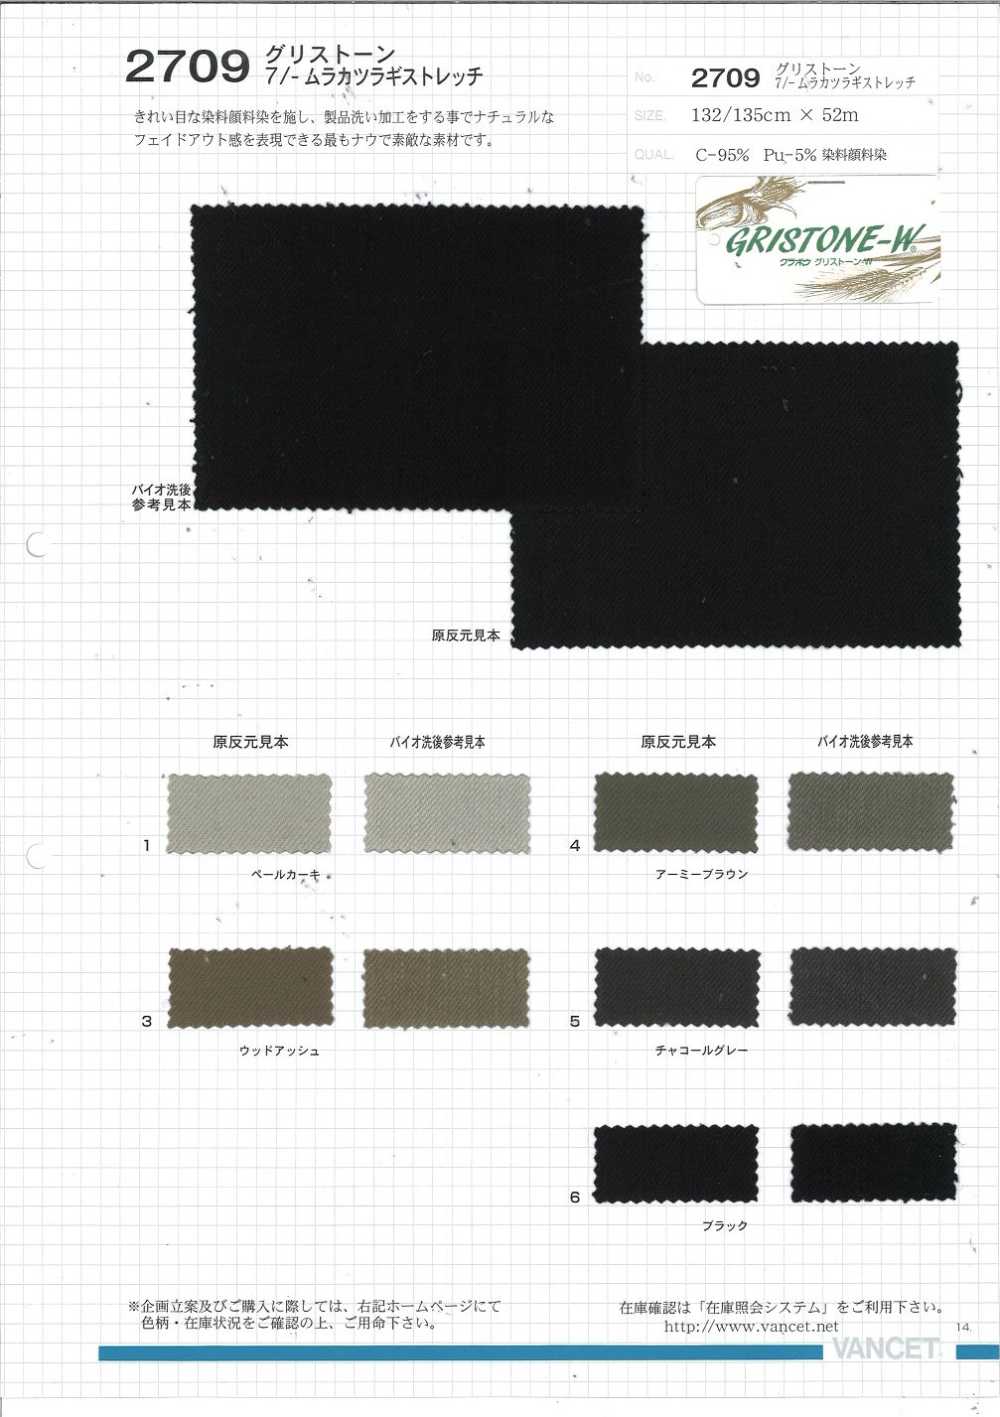 2709 Greasetone 7/ Drill Stretch Dye Pigmento Teñido[Fabrica Textil] VANCET